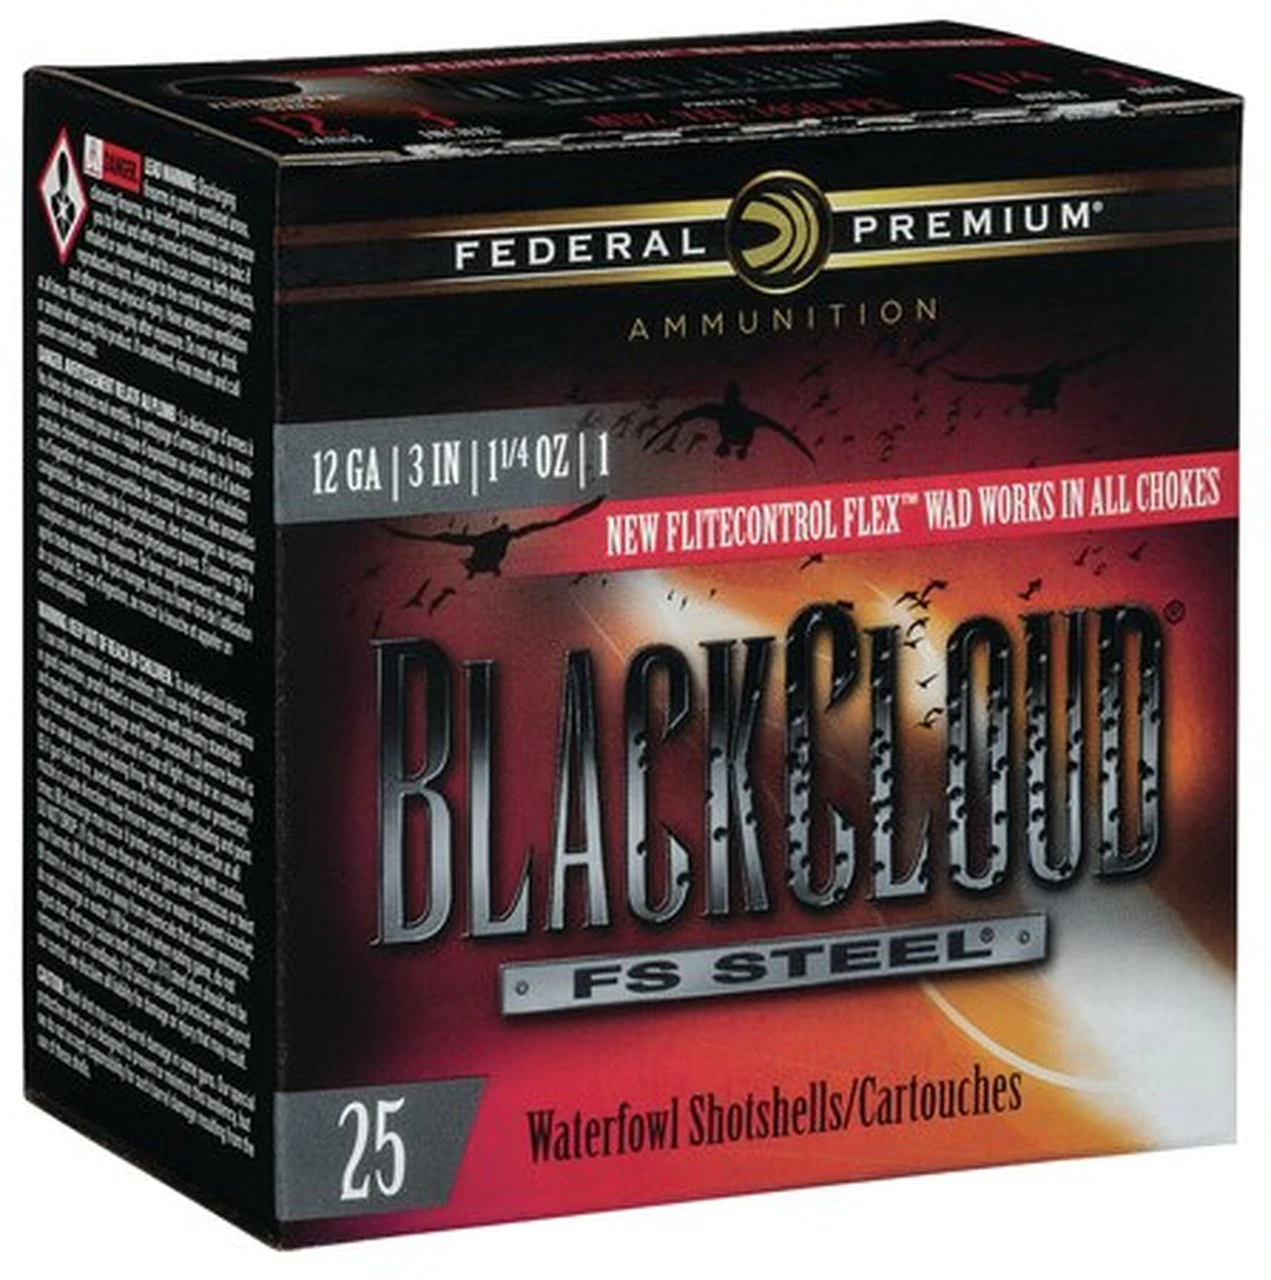 Federal Black Cloud FS Steel 12 Ga 3", 1 1/4 oz, 1 Shot, 250 Rnd (10 boxes) - $258.9